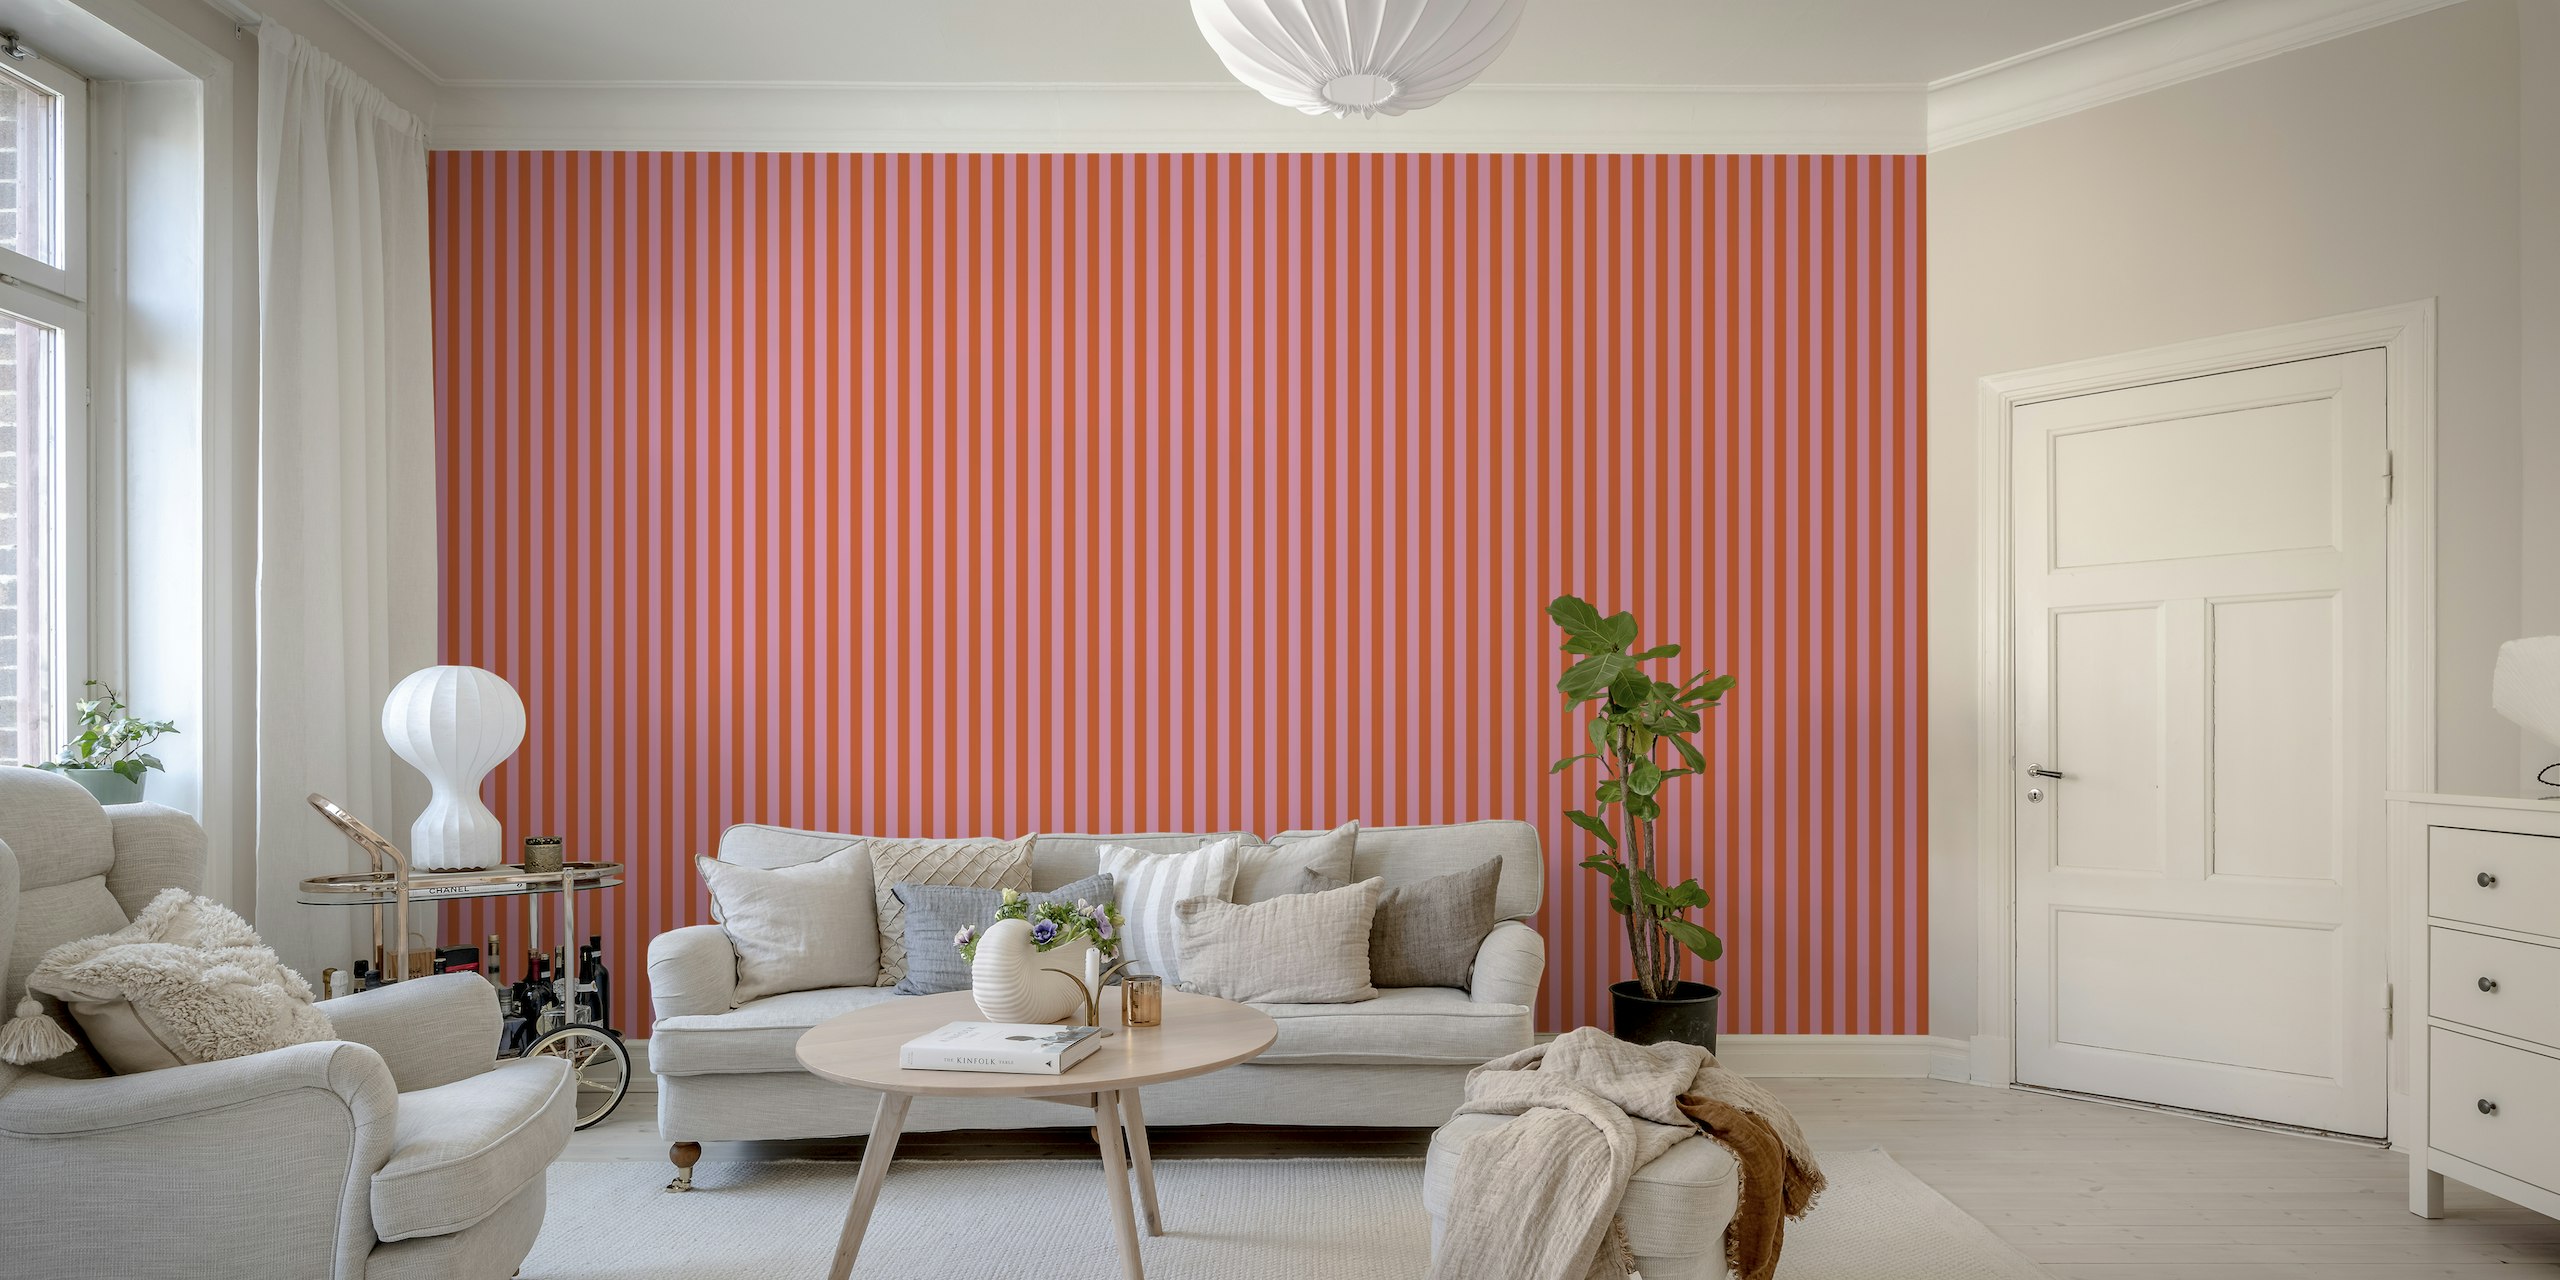 Pink and red awning stripe behang